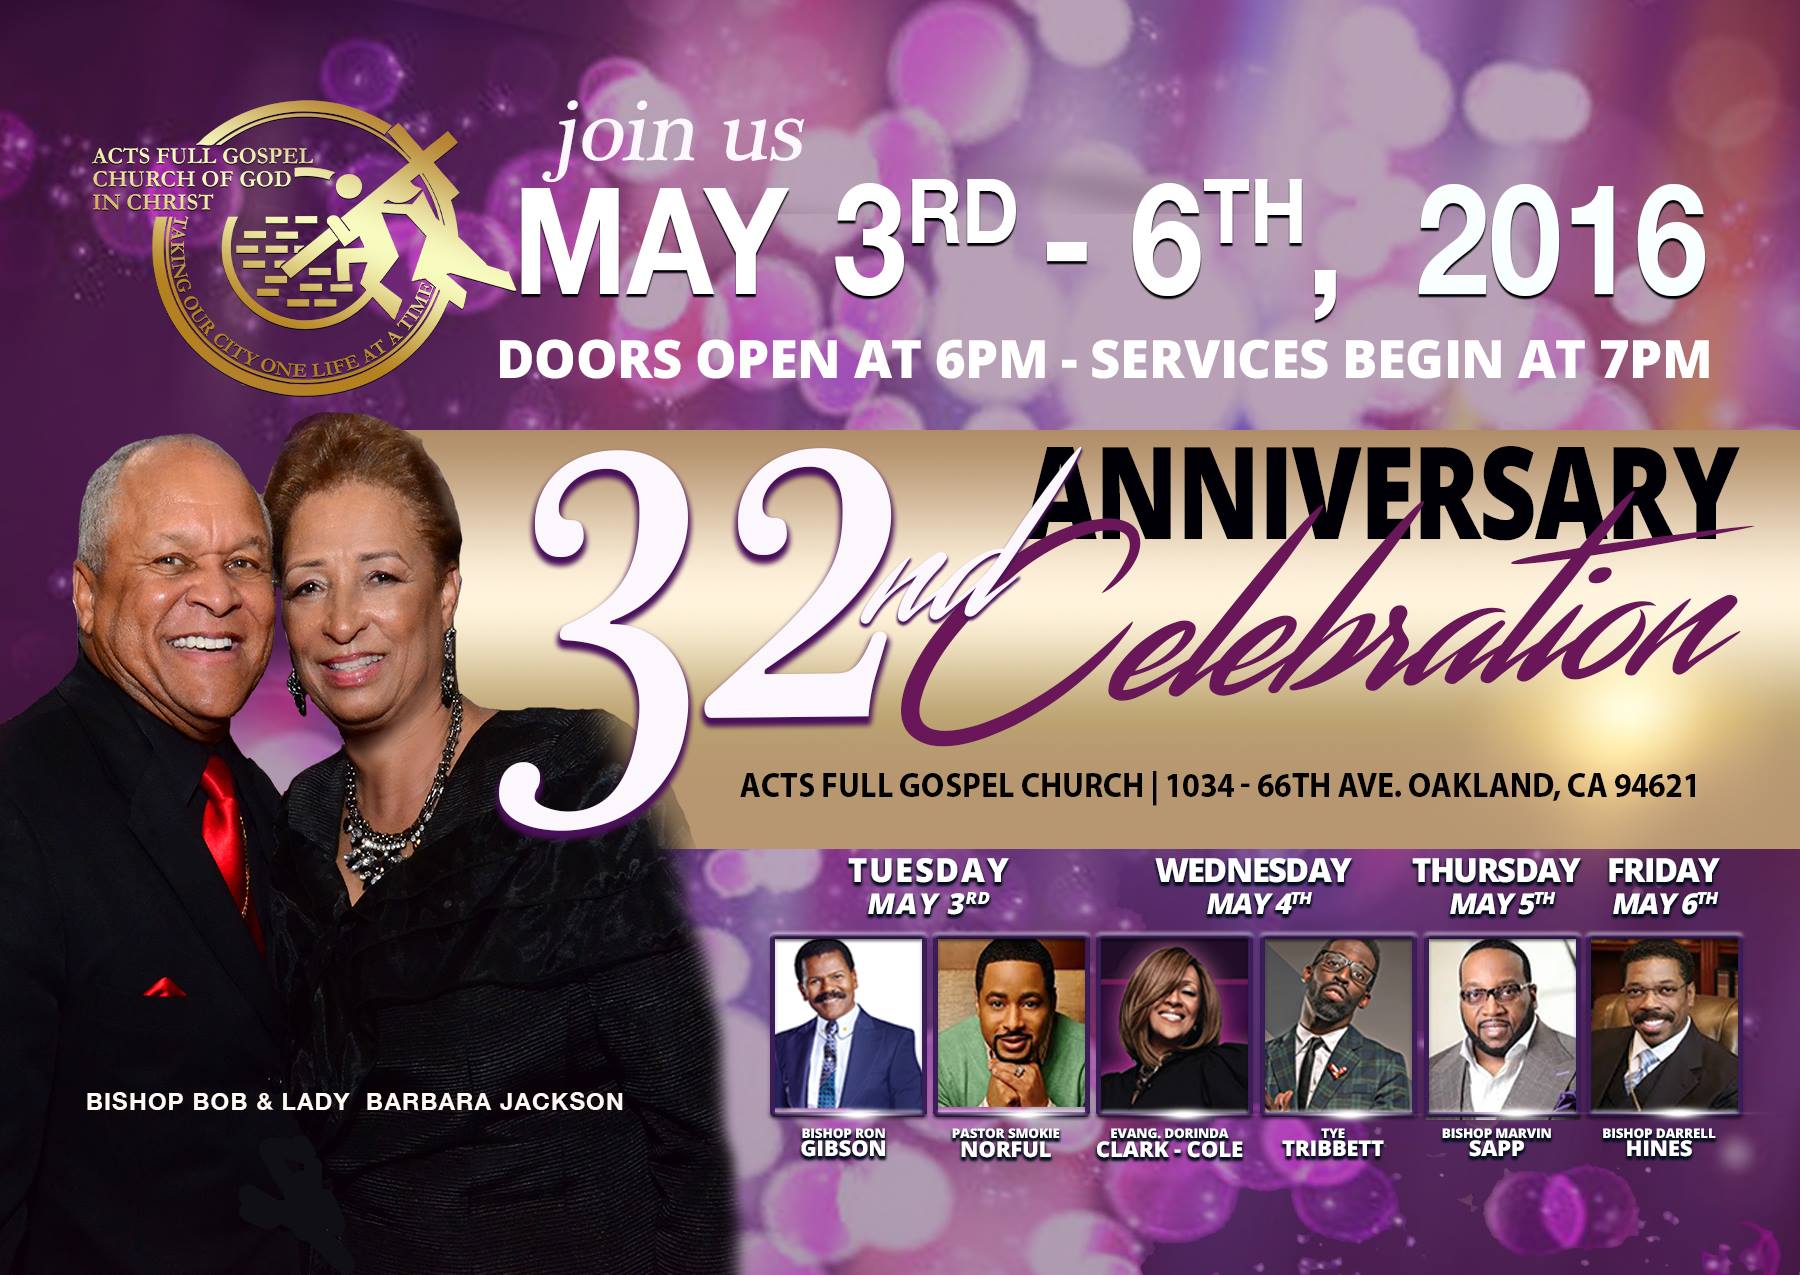 Acts Full Gospel - 32nd Anniversary Celebration